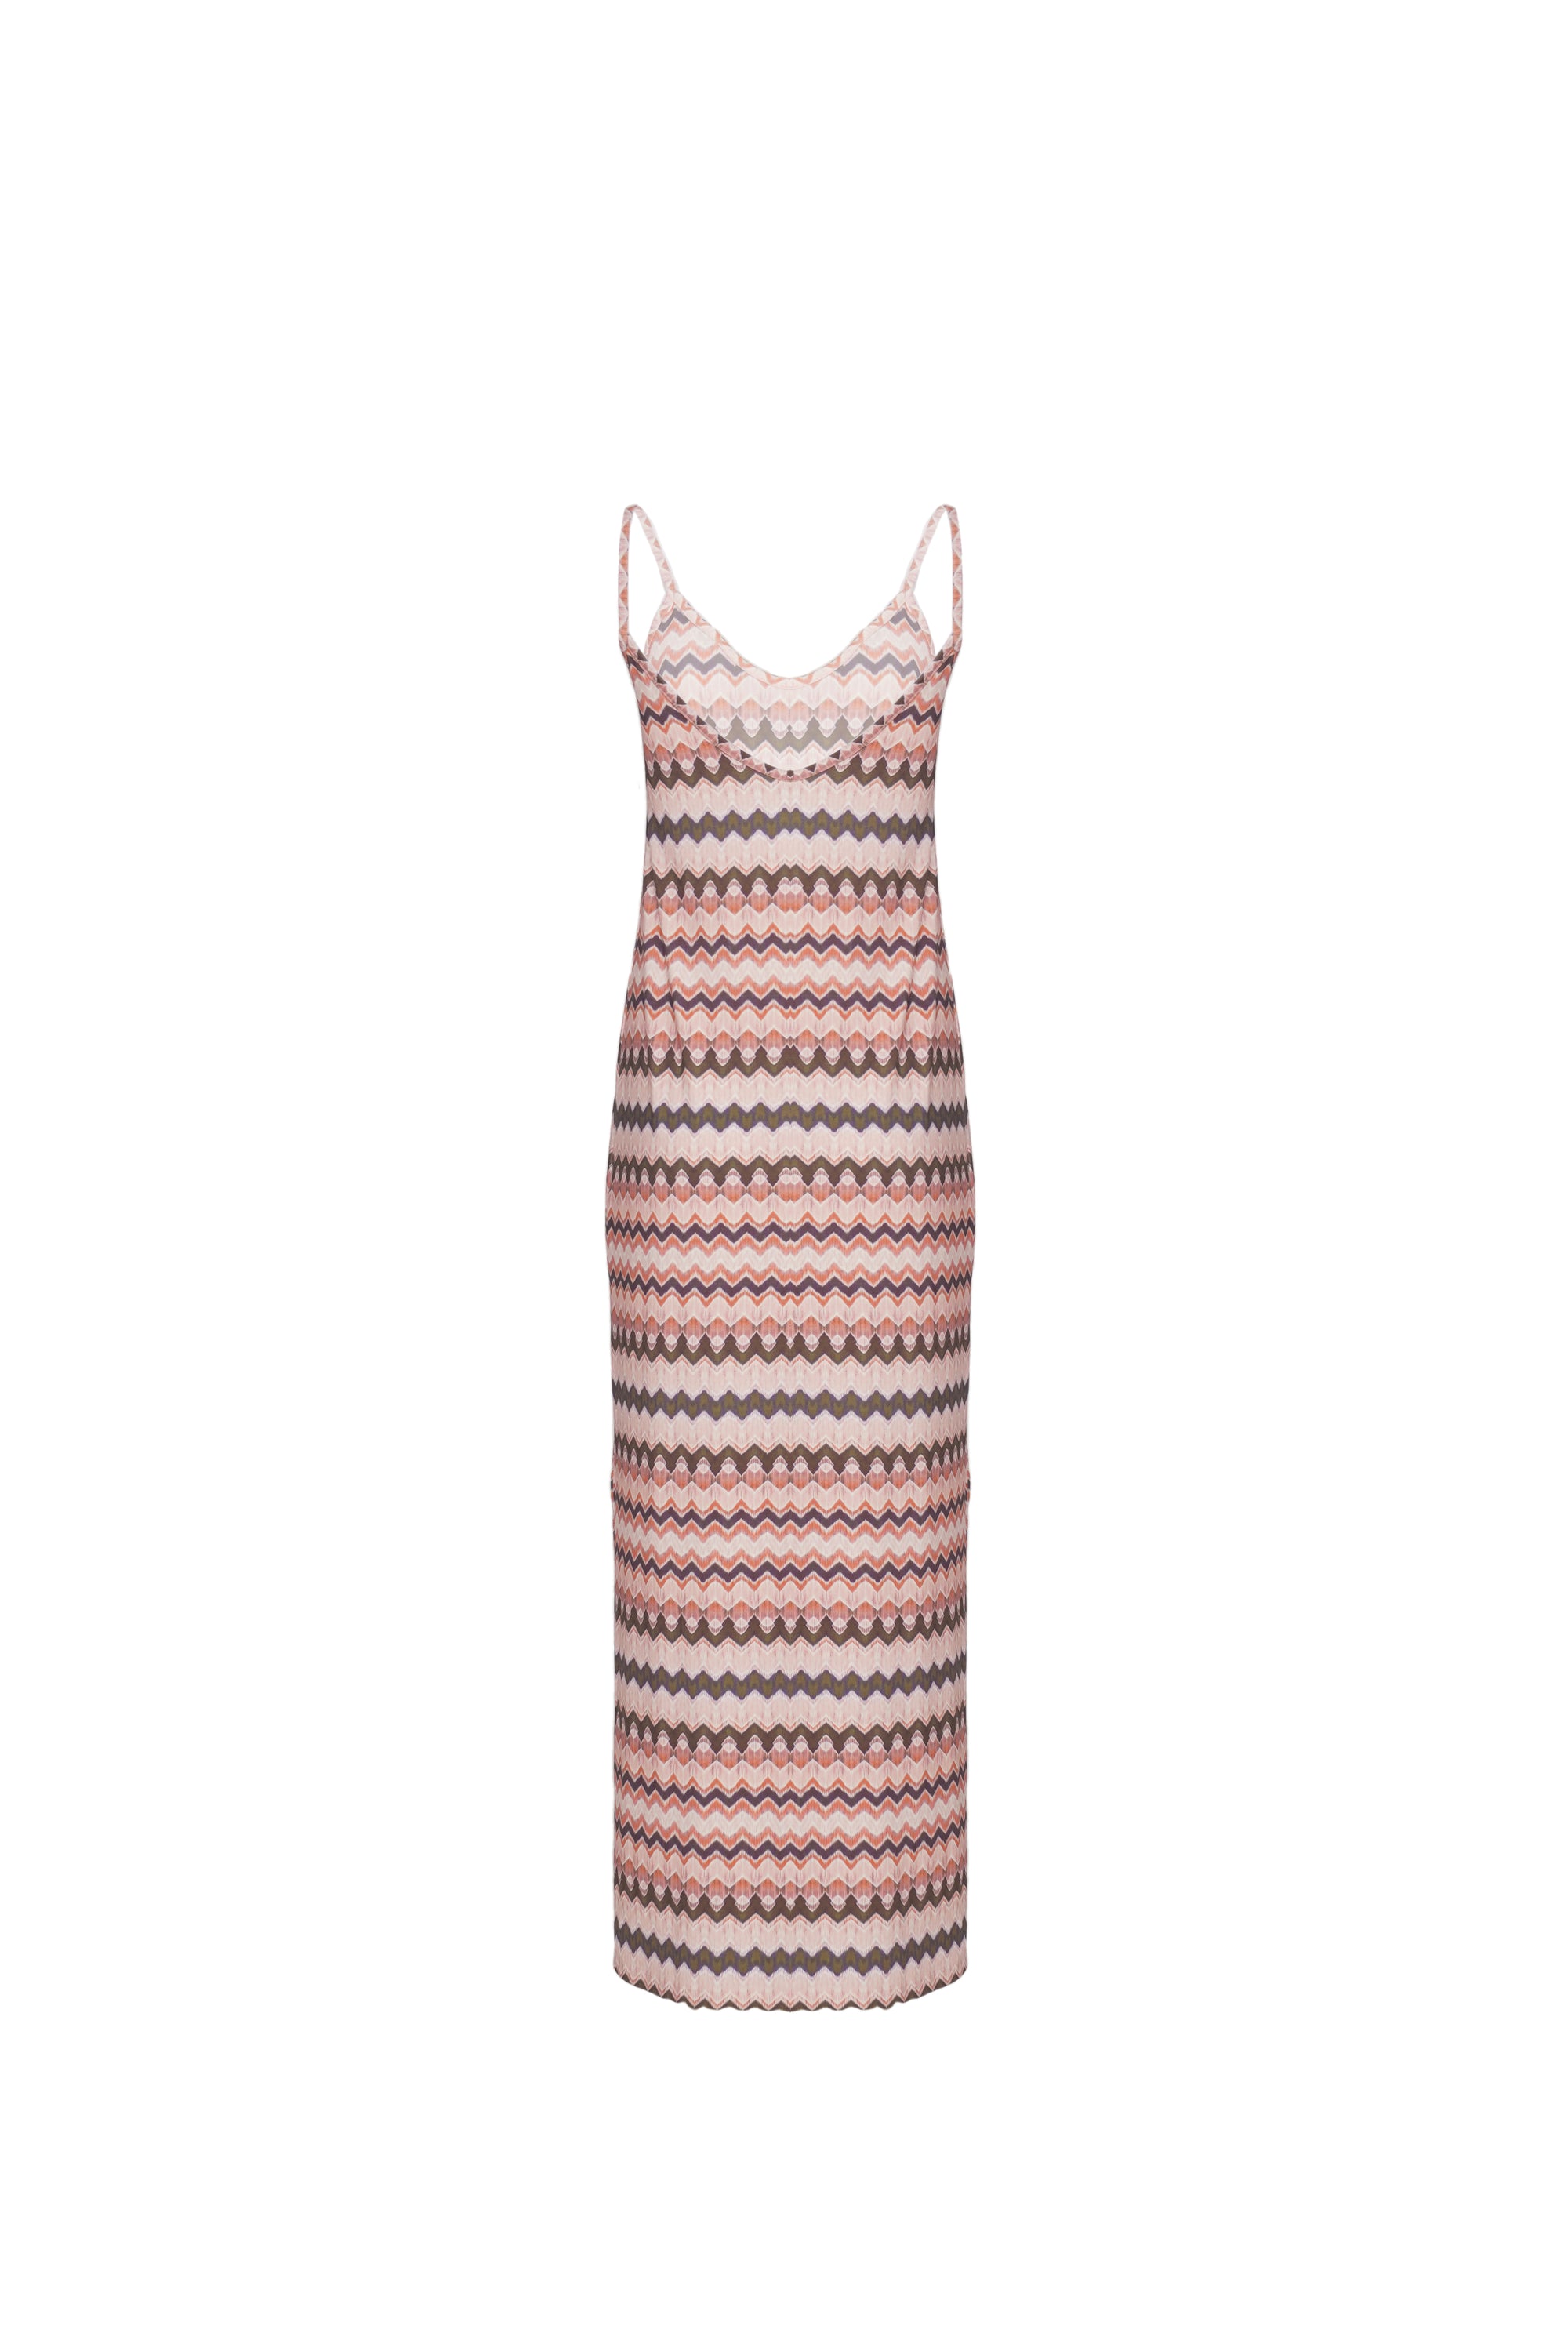 Back view of a birkin stripe maxi dress